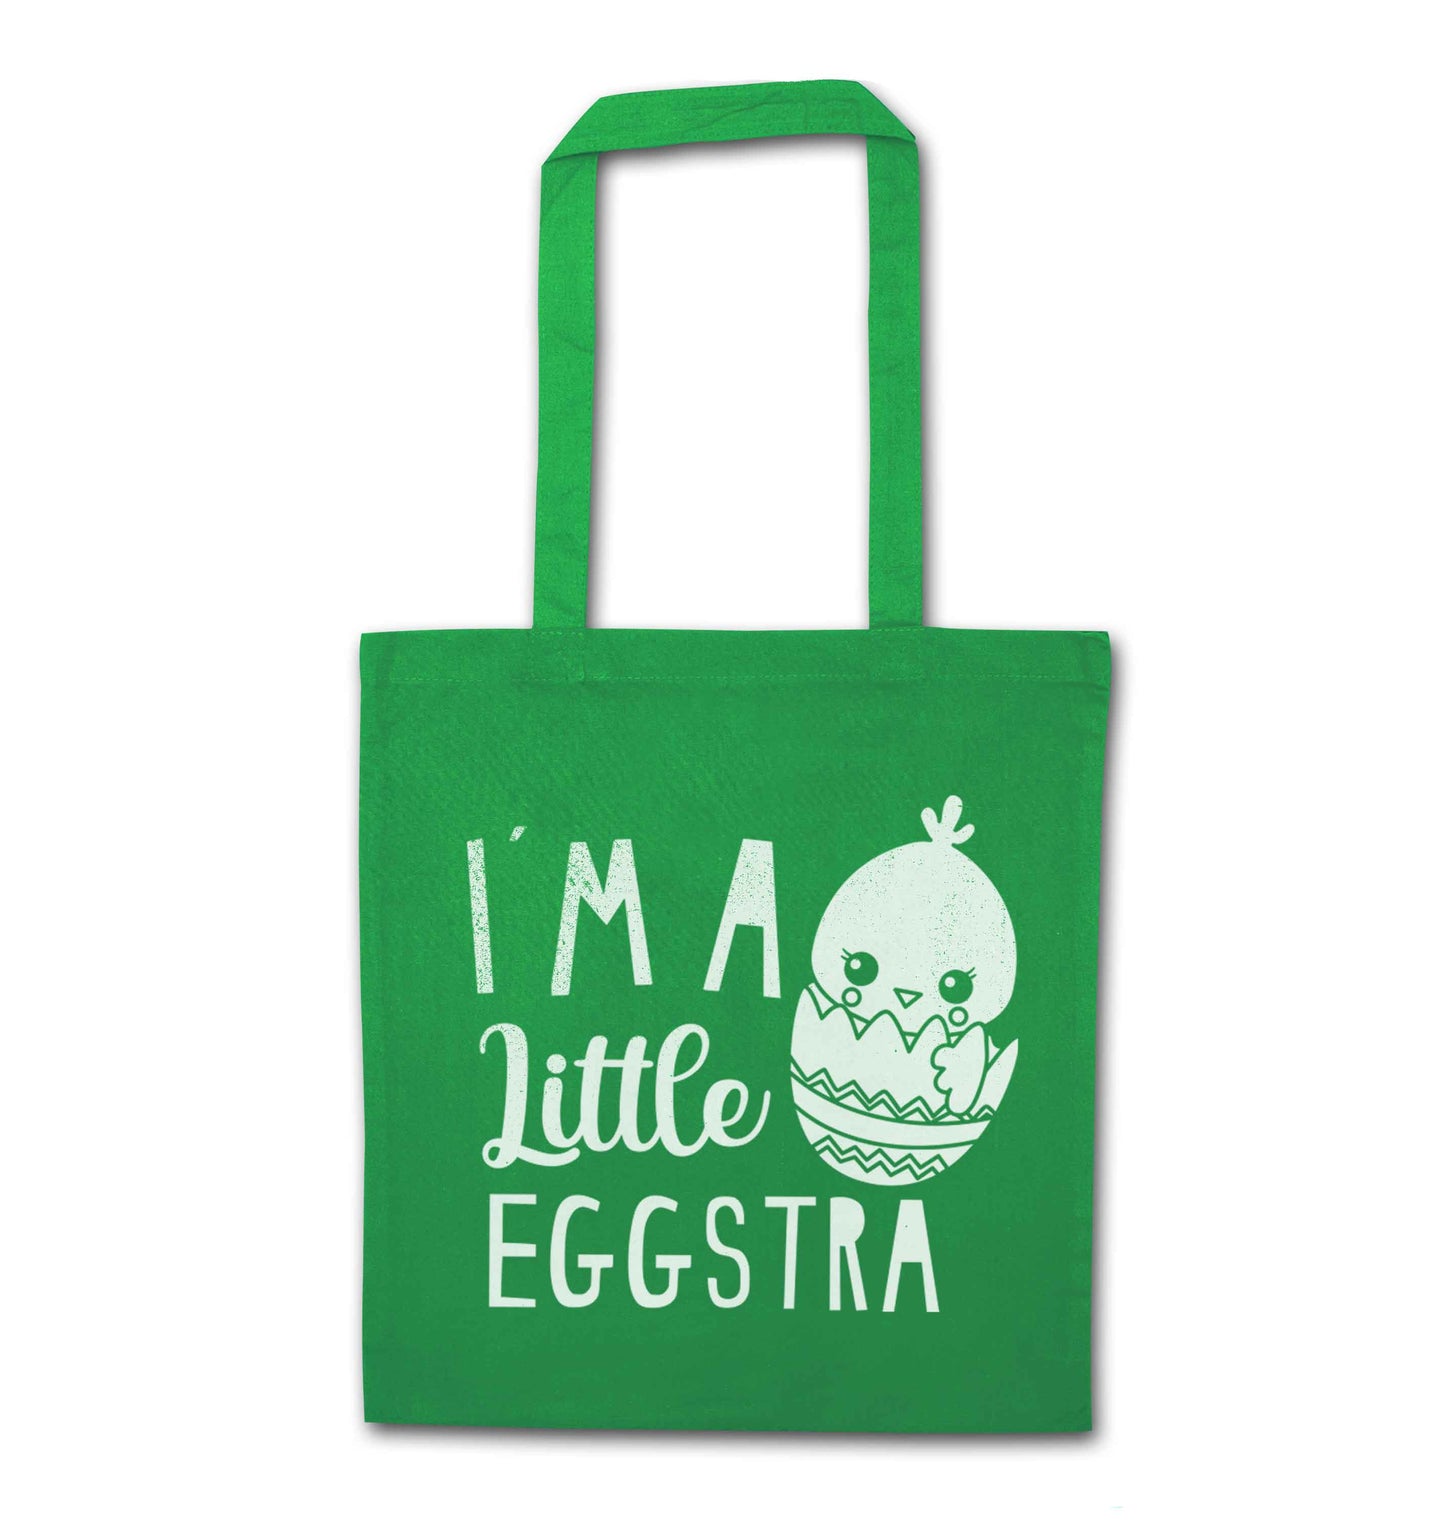 I'm a little eggstra green tote bag